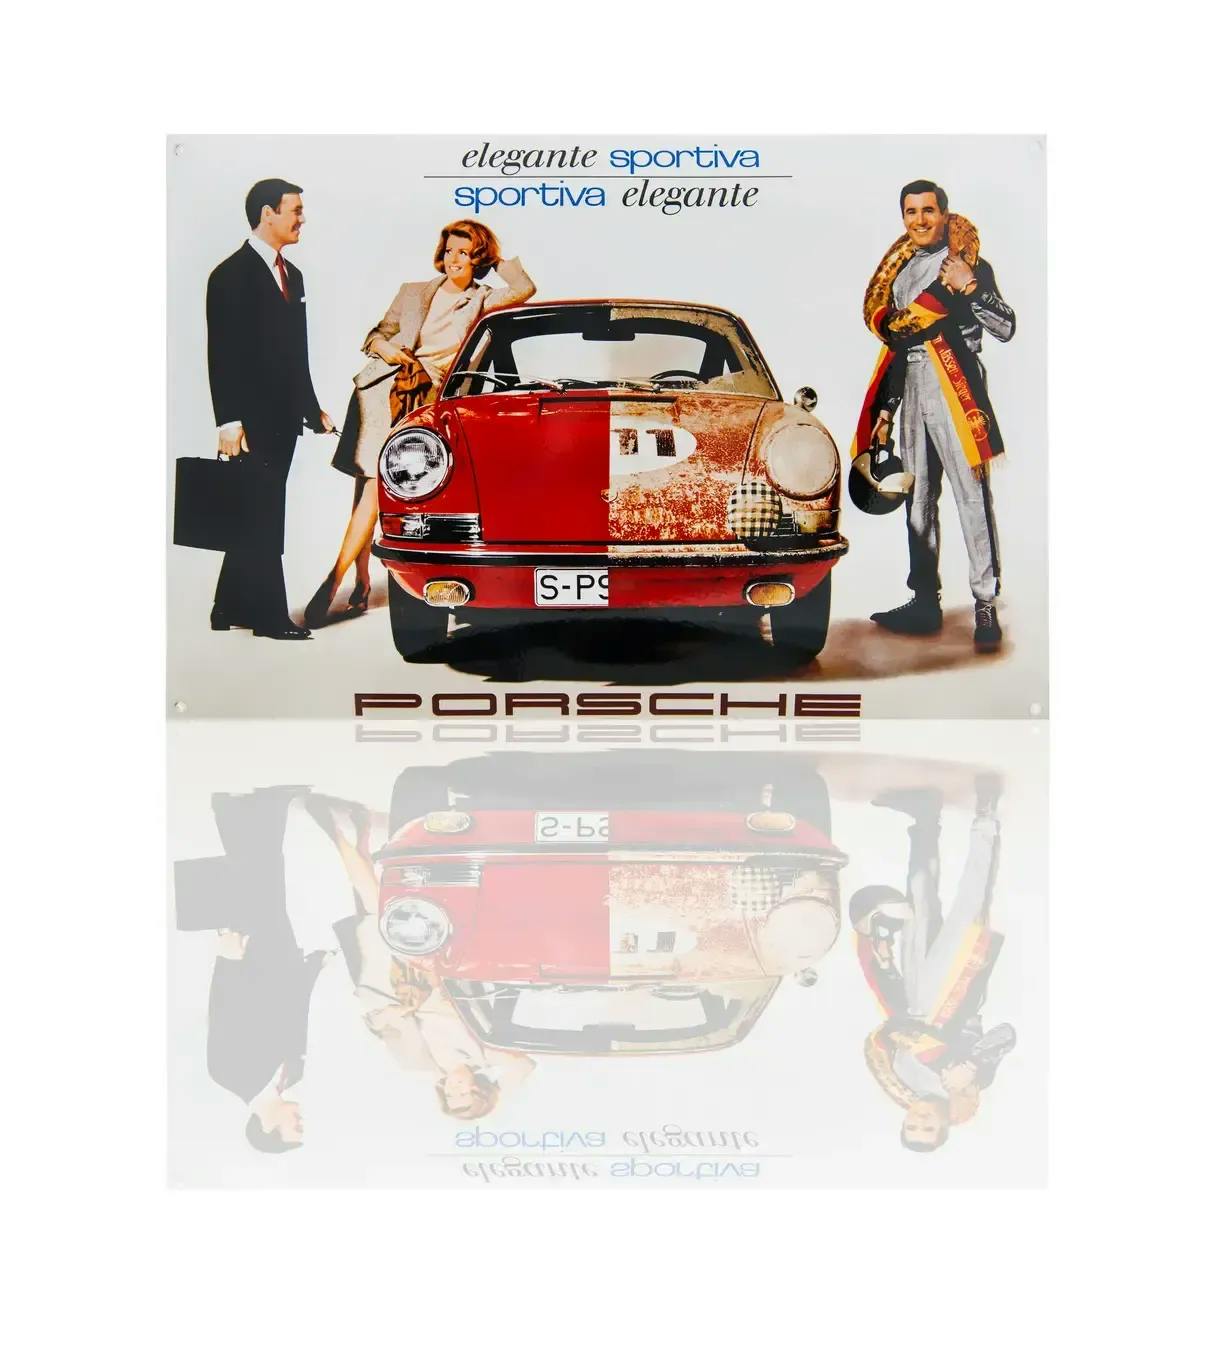 Porsche Classic enamel sign – "Elegante sportiva" 1